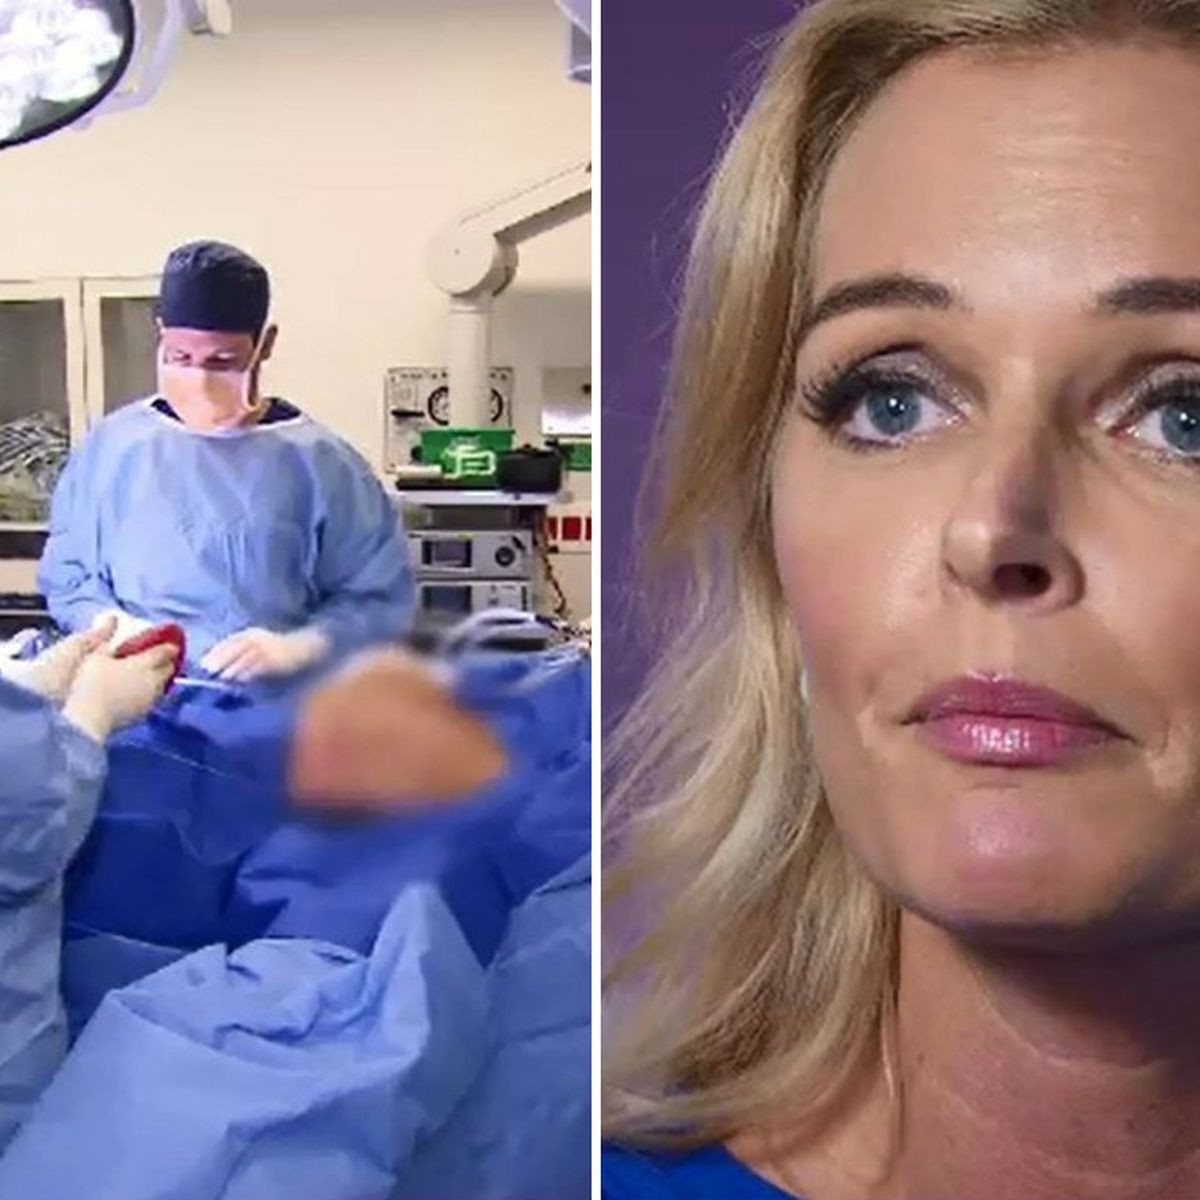 Breast Augmentation Sydney using Implants - Dr Hunt Plastic Surgeon